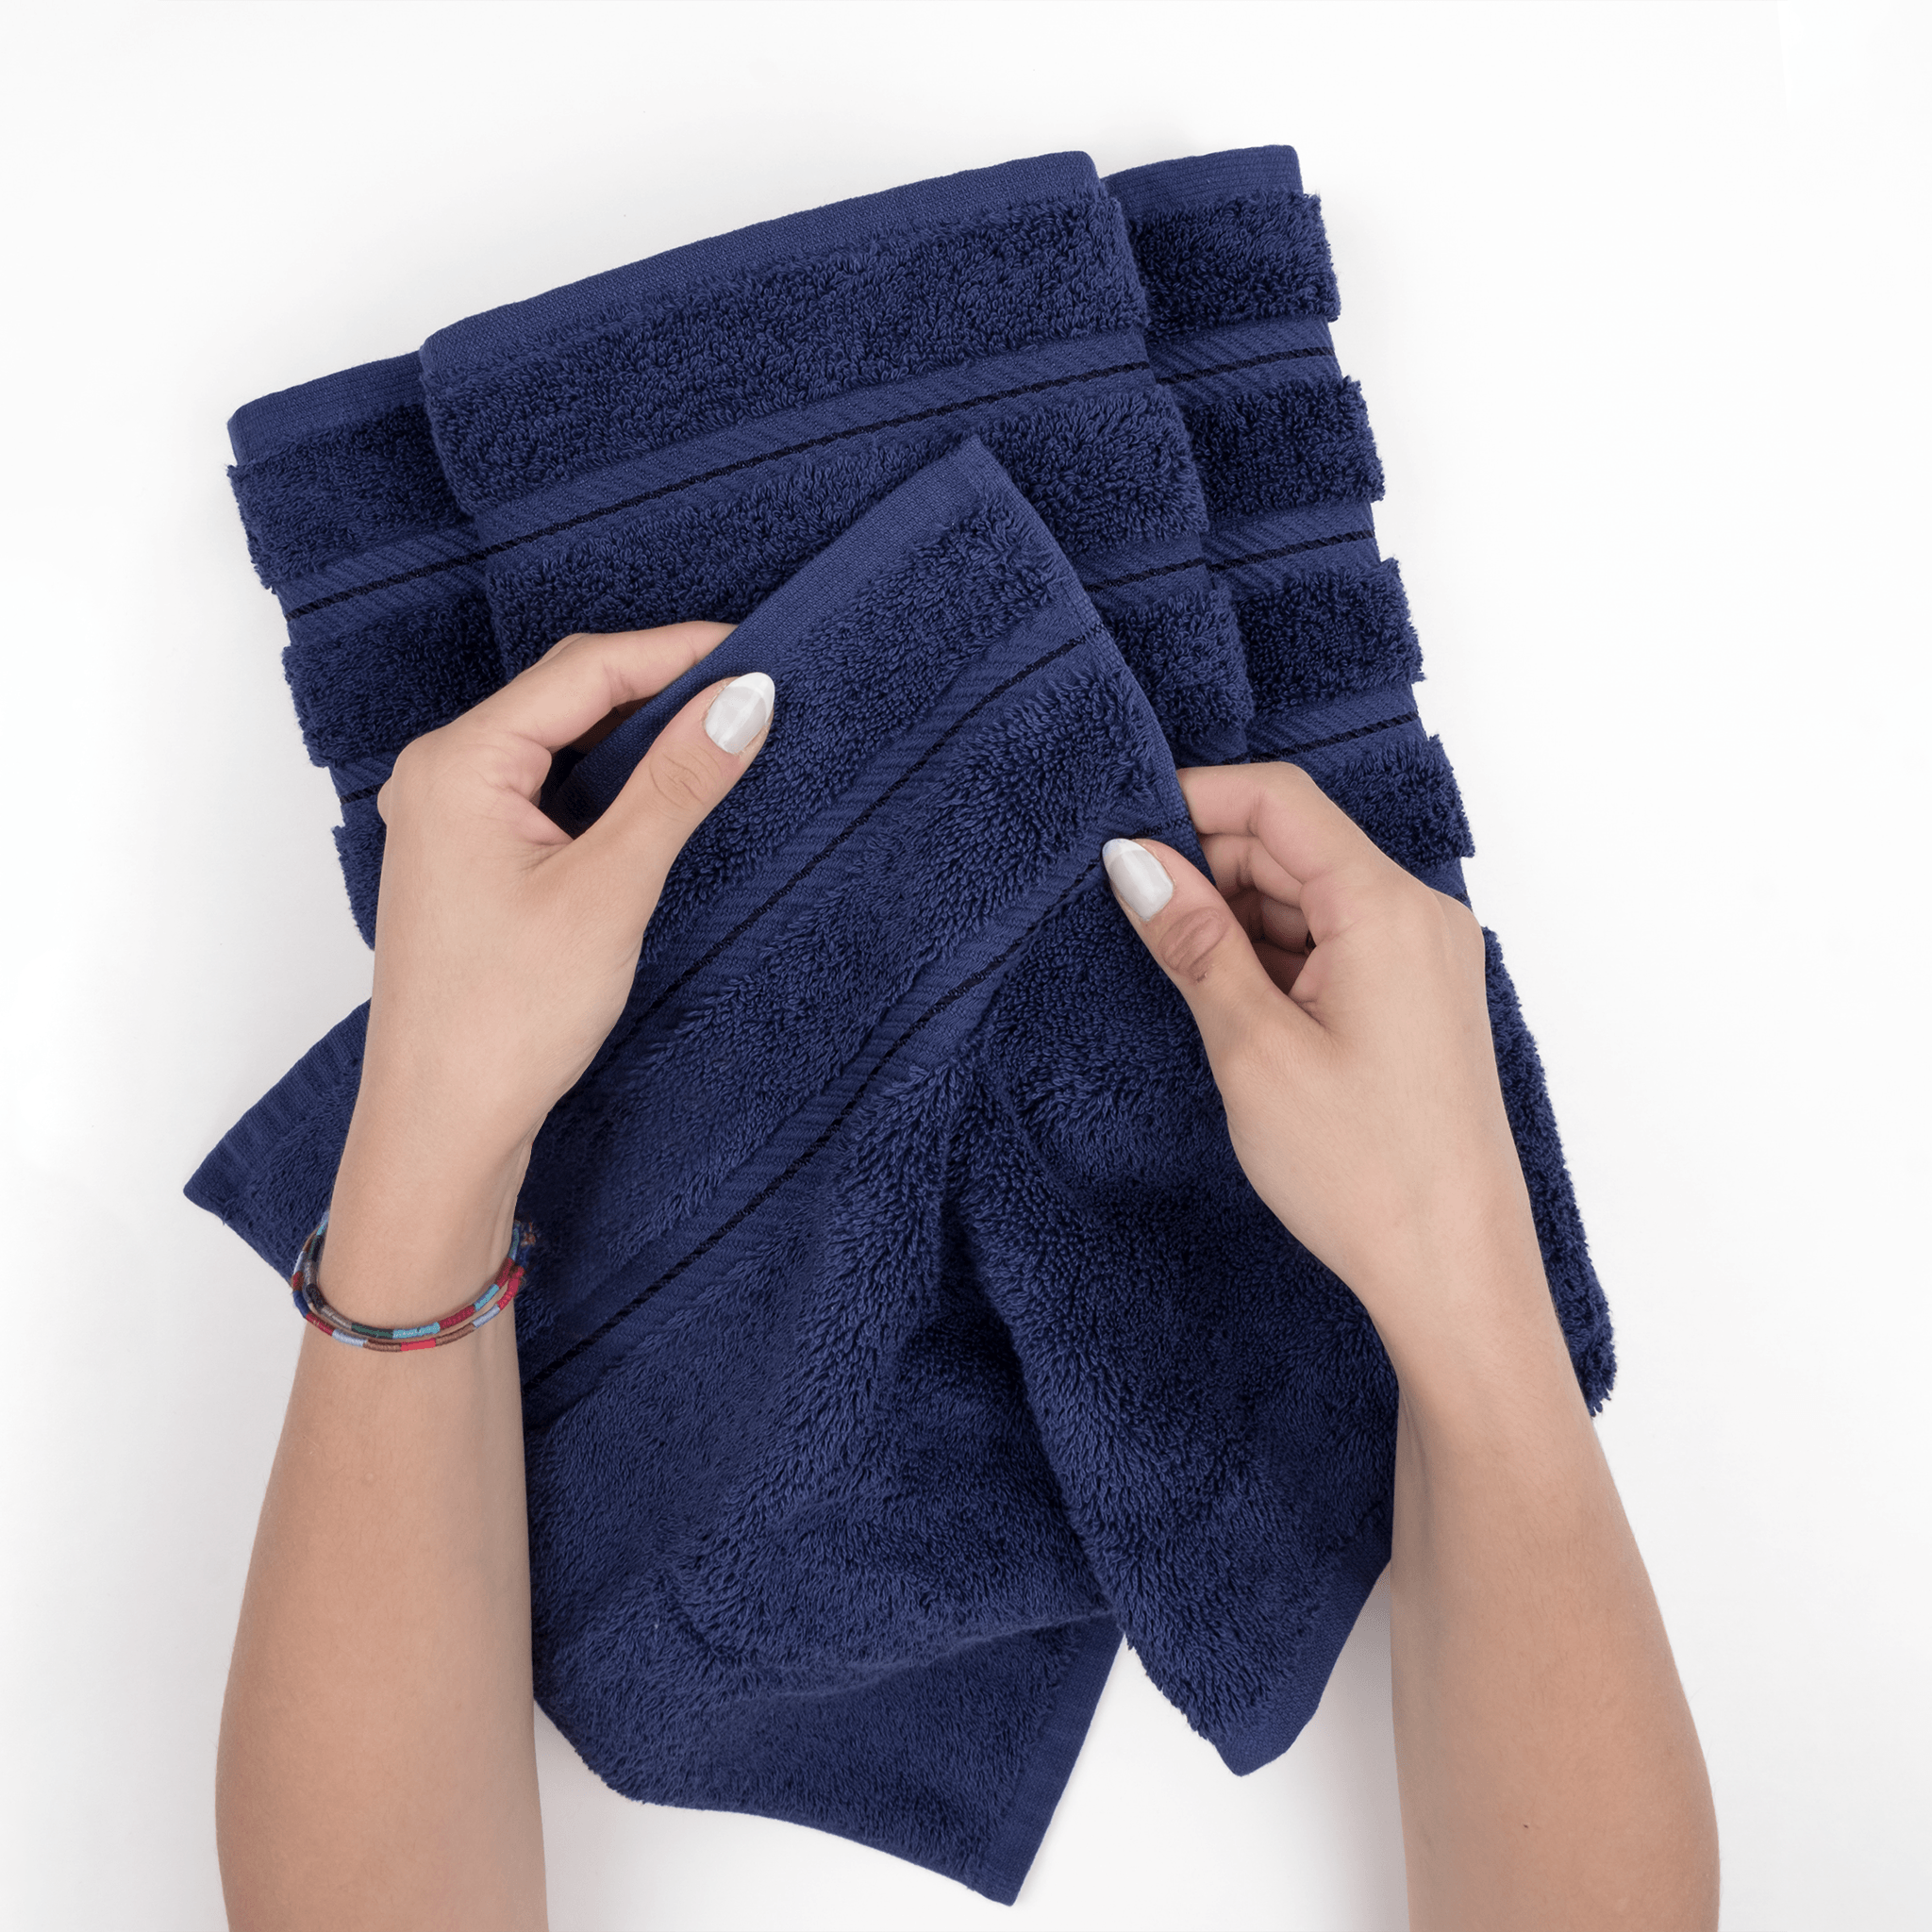 American Soft Linen Luxury 6 Piece Towel Set, 2 Bath Towels 2 Hand Towels 2  Washcloths, 100% Turkish Cotton Towels for Bathroom, Aqua Blue Towel Sets